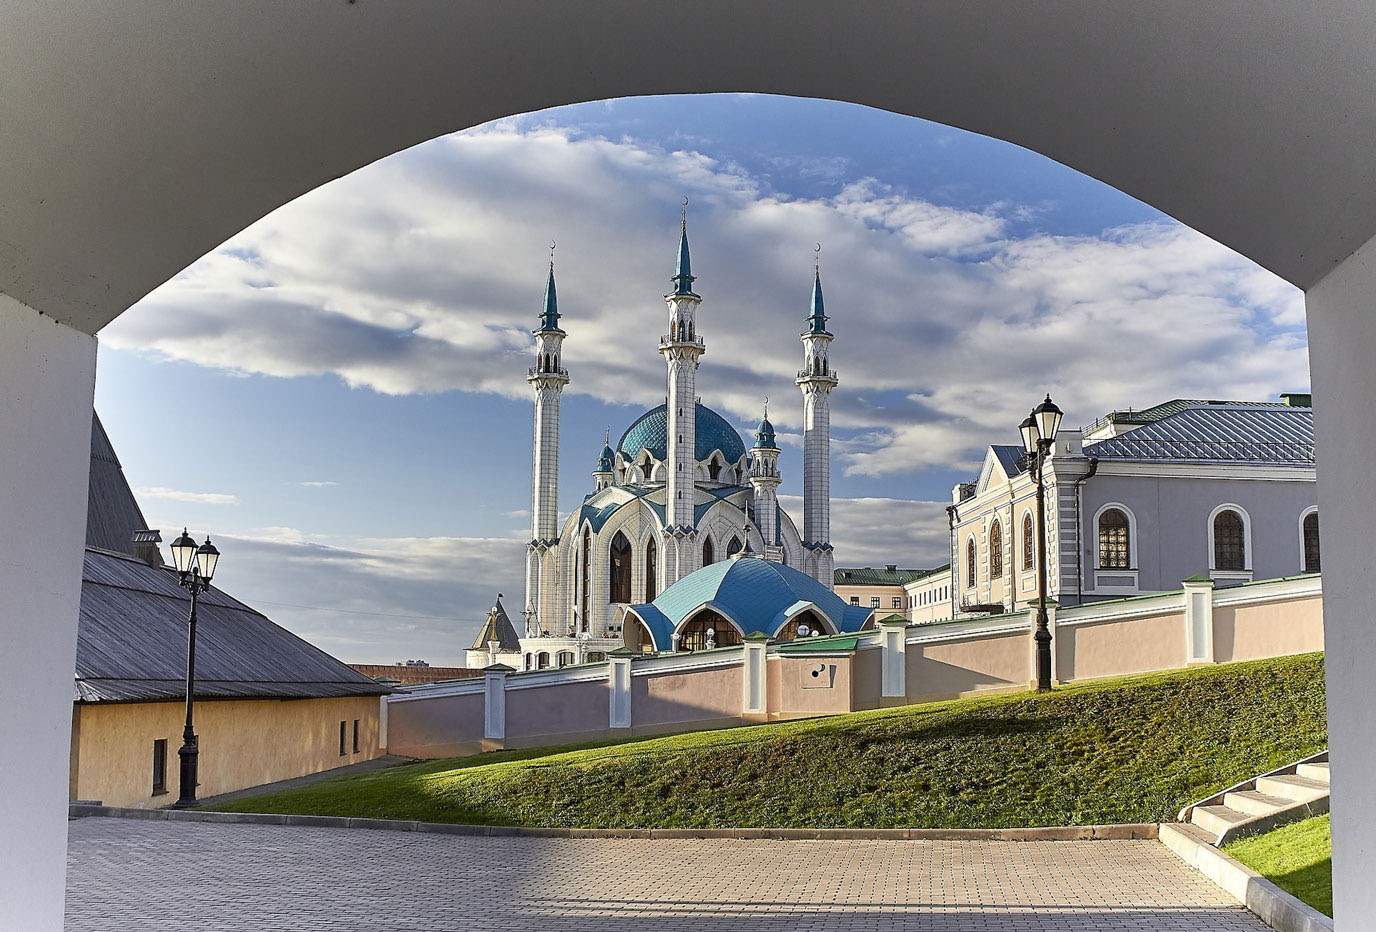 Kul Sharif Mosquem inside Kazakn Kremlin. Image: Staropramen under a CC license